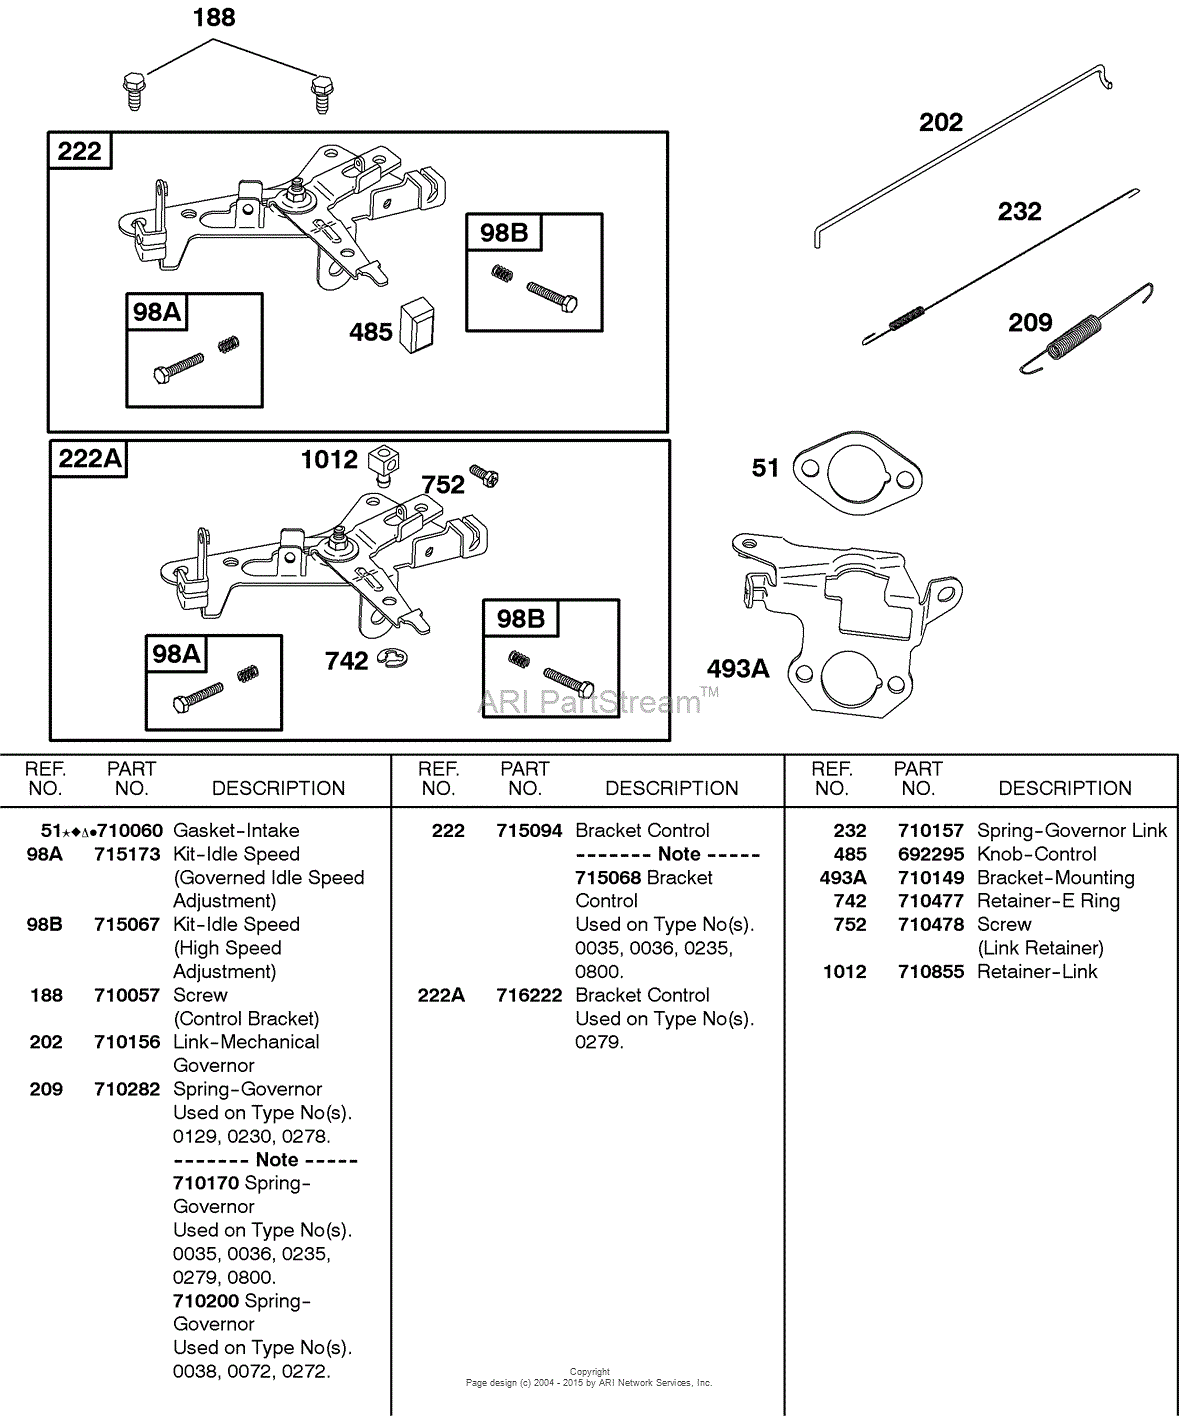 linkage briggs and stratton throttle spring diagram